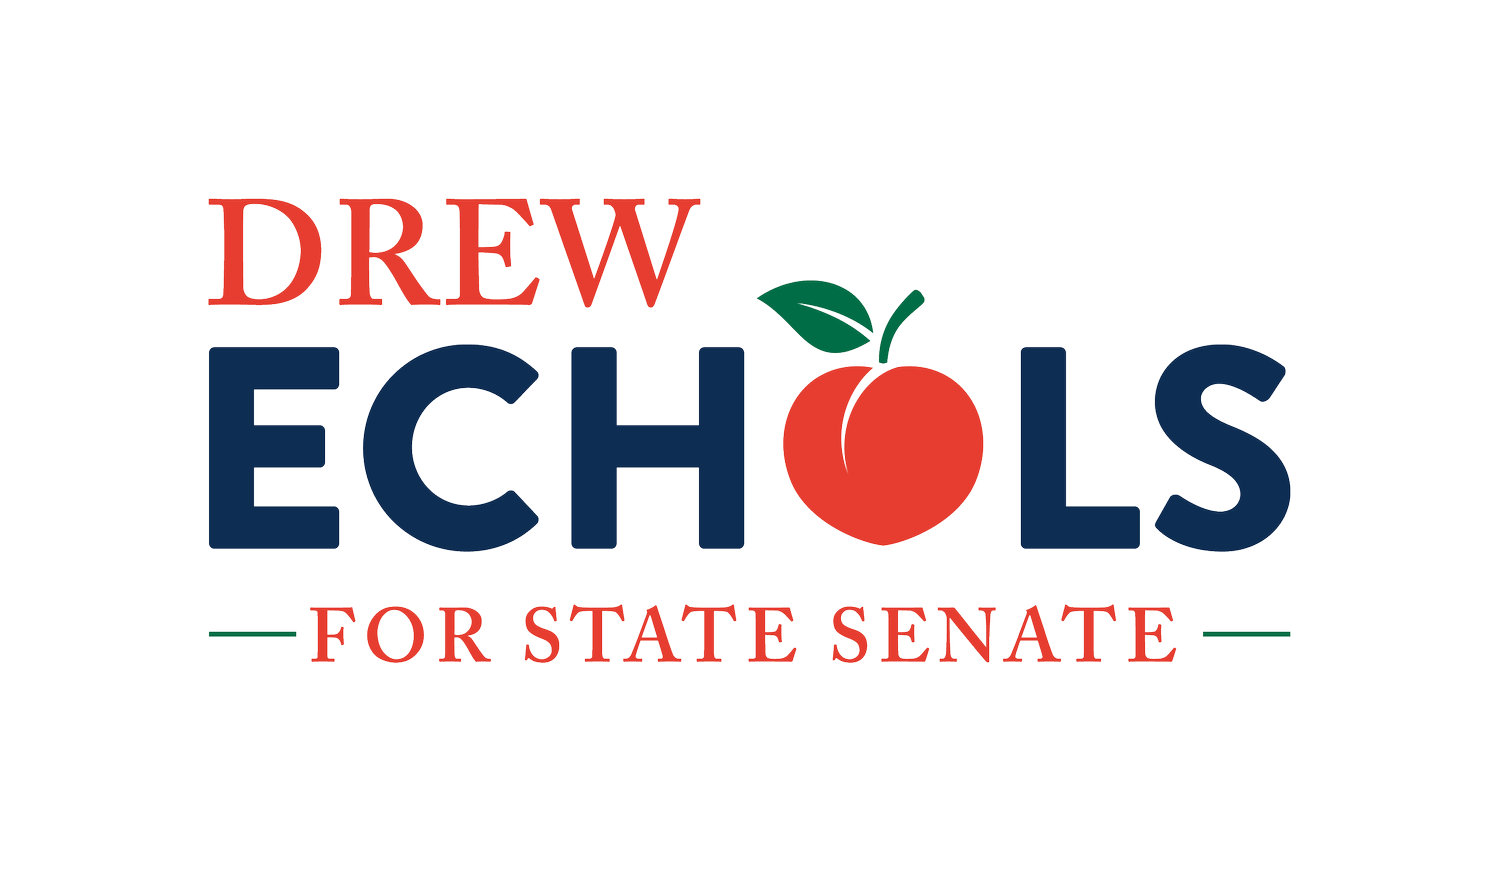 Drew Echols for State Senate